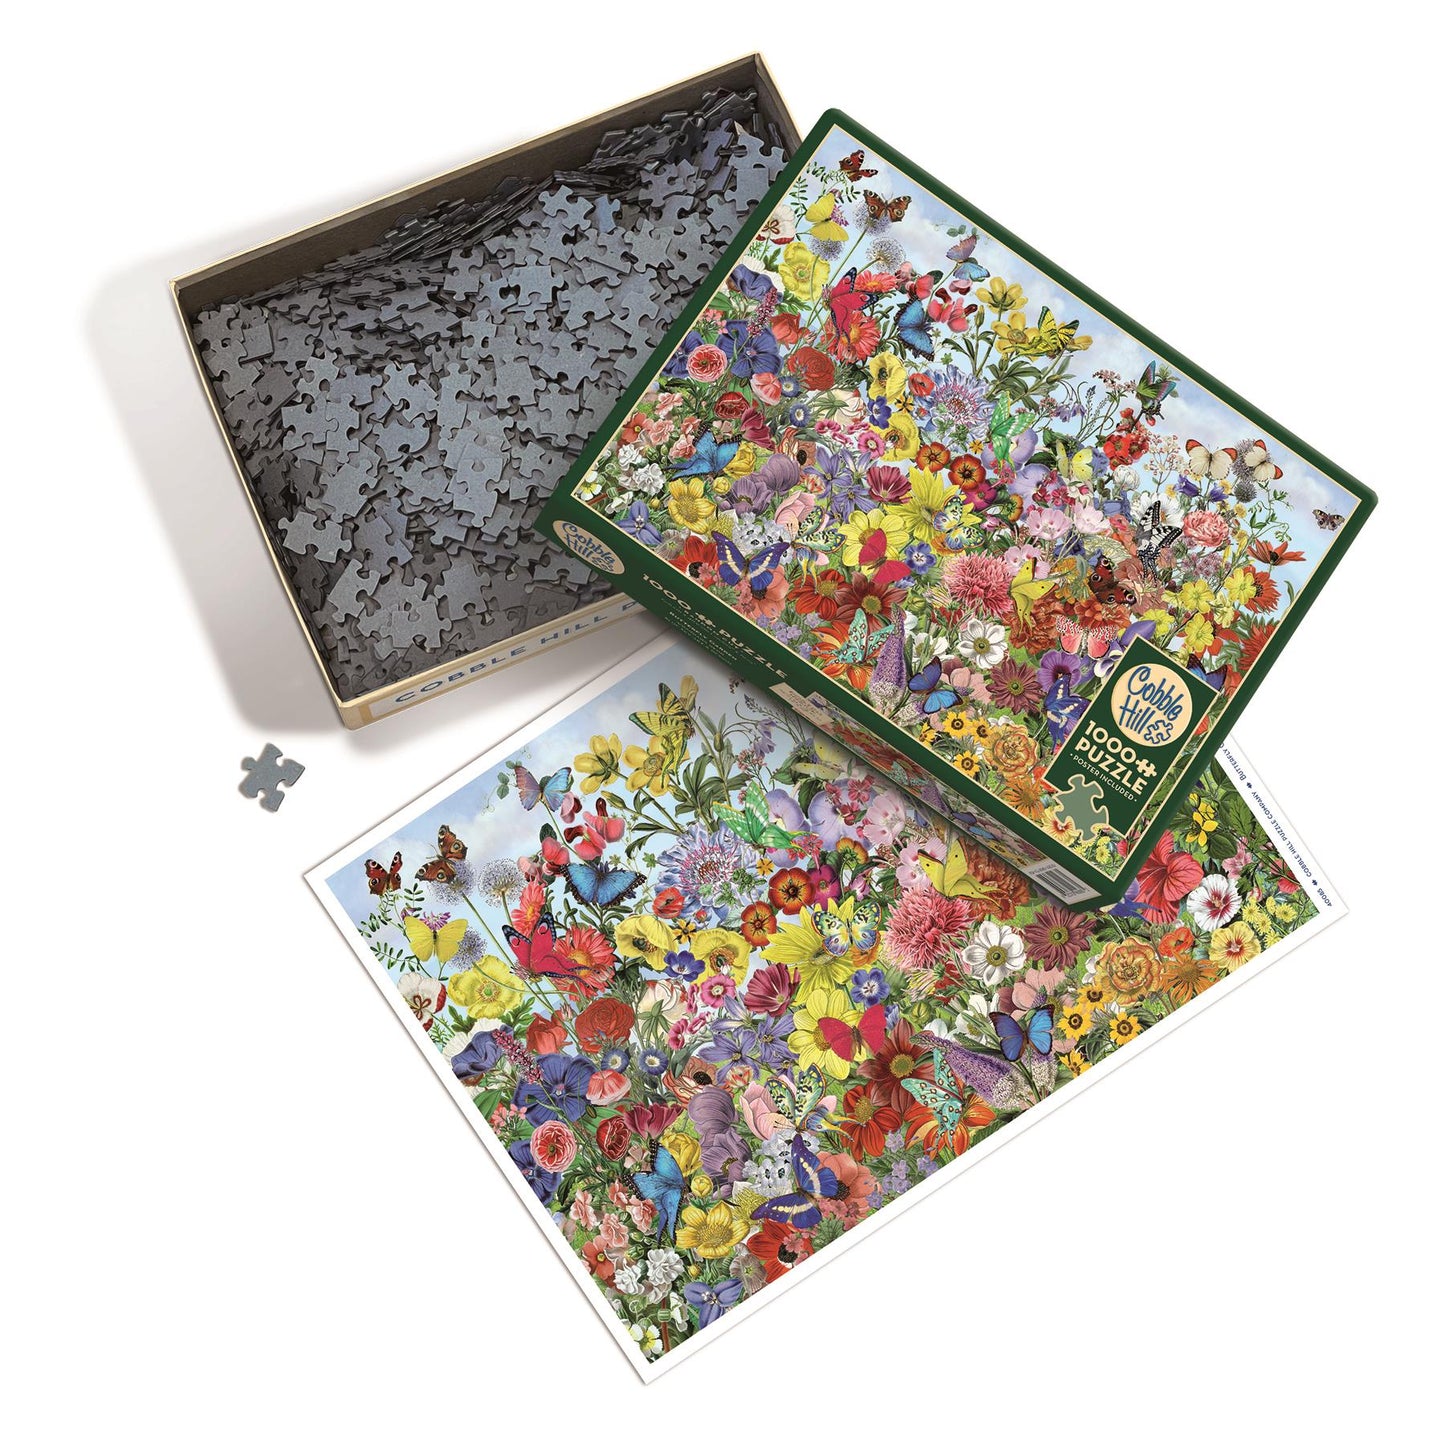 Butterfly Garden 1000 Piece Jigsaw Puzzle